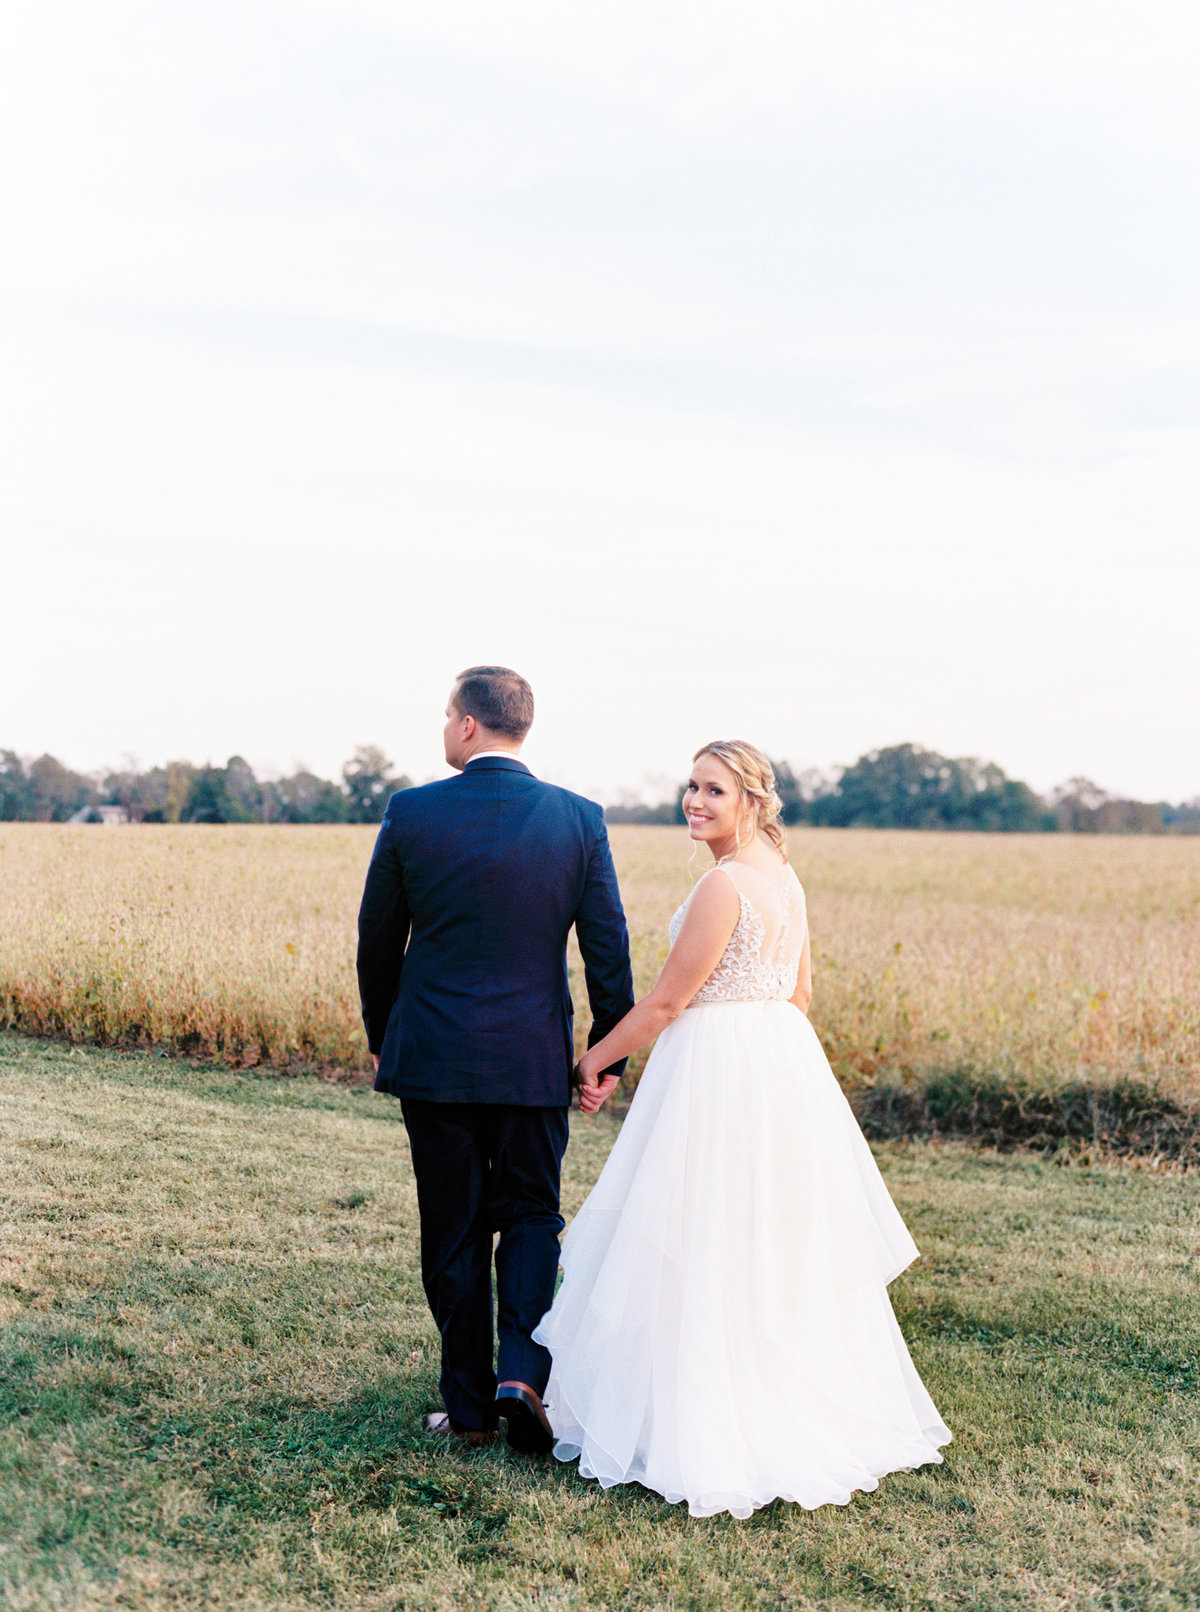 Easton_Maryland-fall-backyard-wedding-photographer-Richmond-natalie-jayne-photography-image-11-4